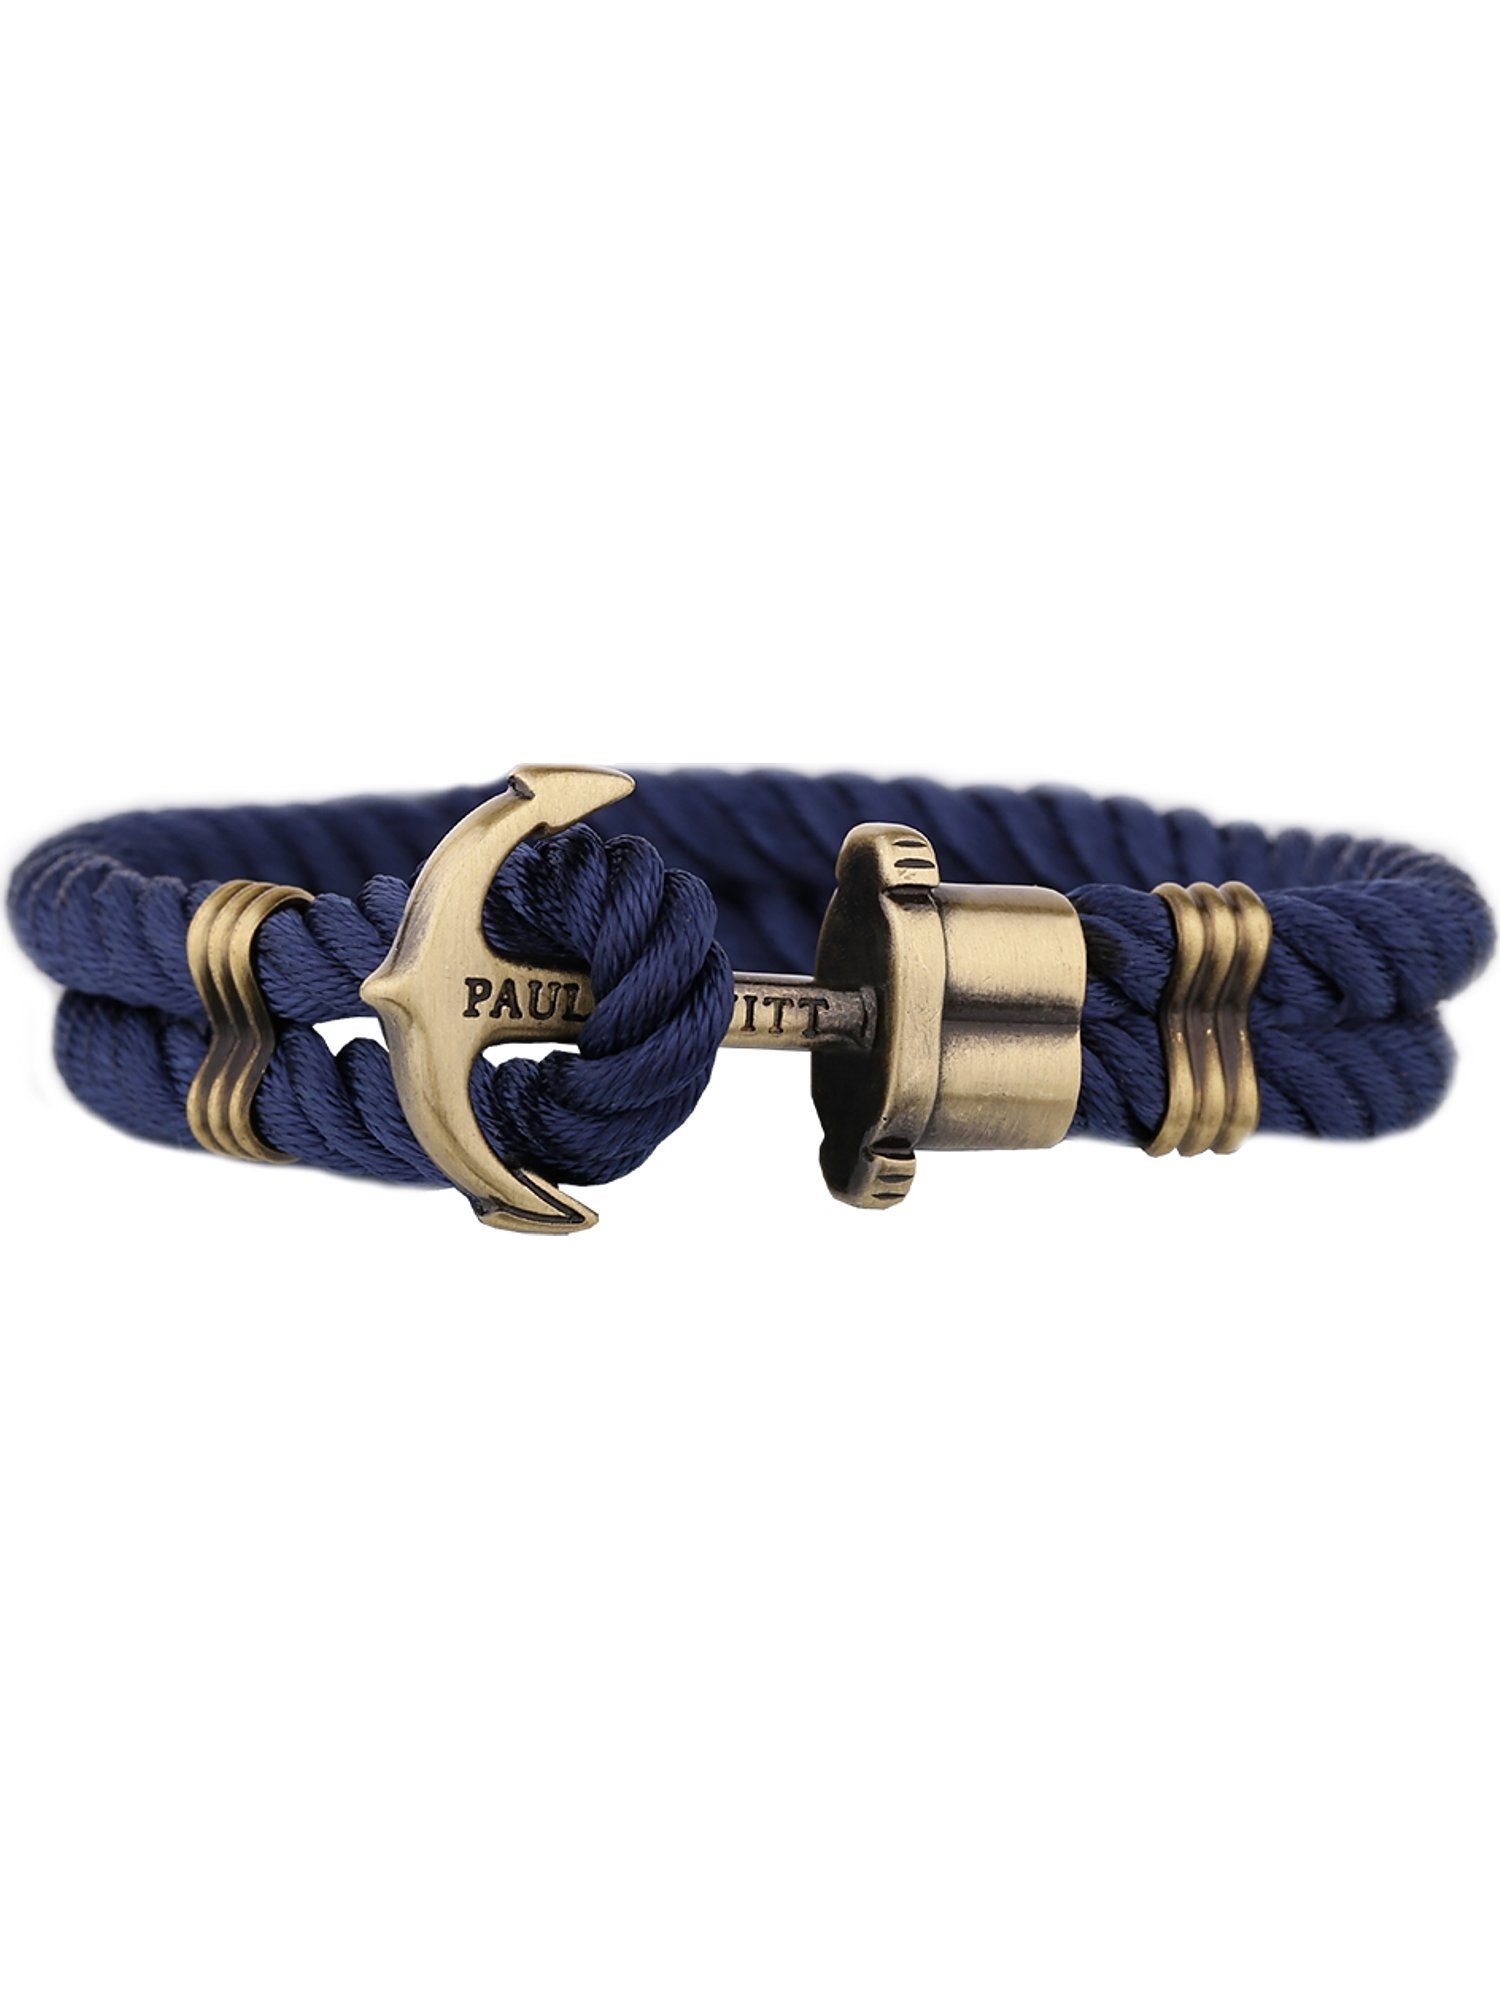 Messing, Armband Hewitt blau Perlon/Nylon, HEWITT Paul trendig Unisex-Armband PAUL